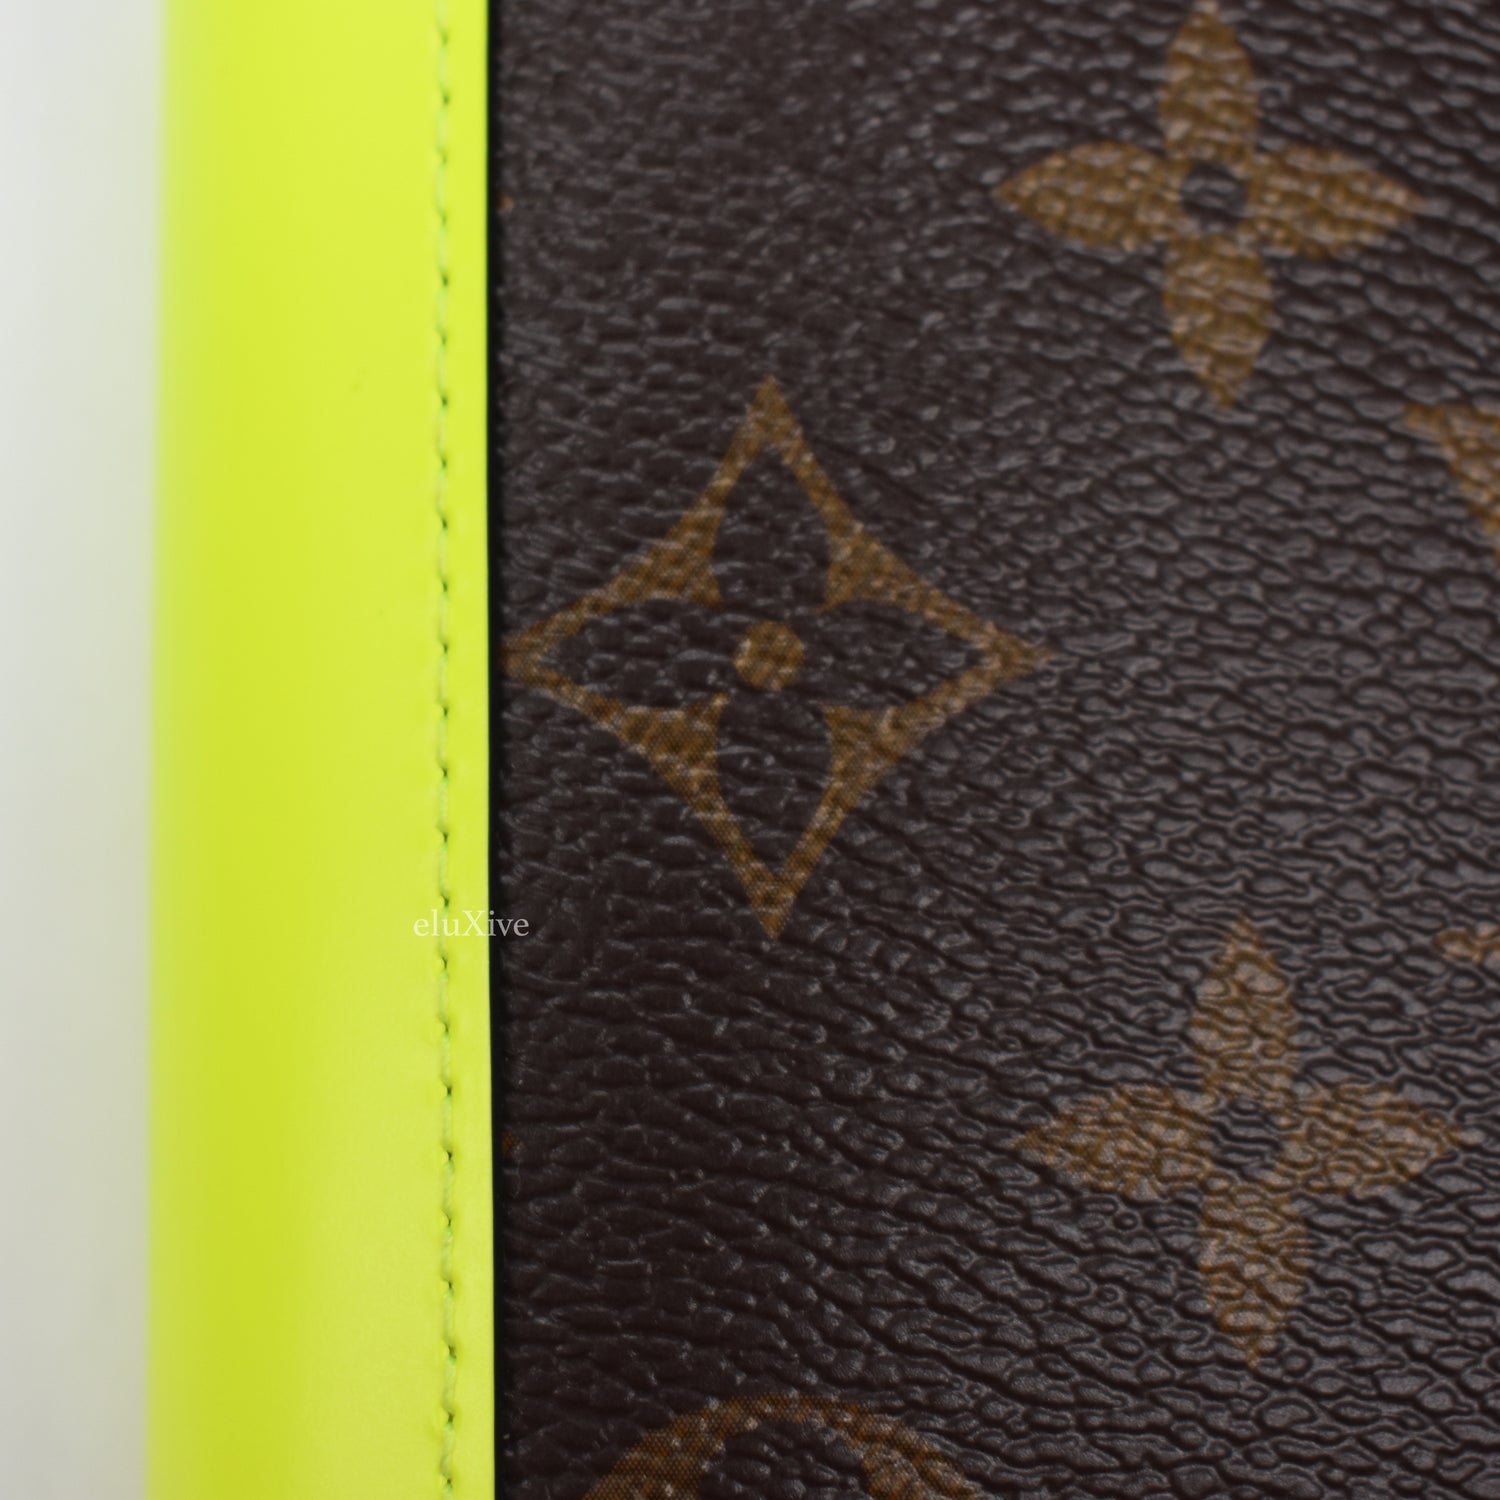 Louis Vuitton - Brown Monogram Macassar Multiple Wallet (Fluo